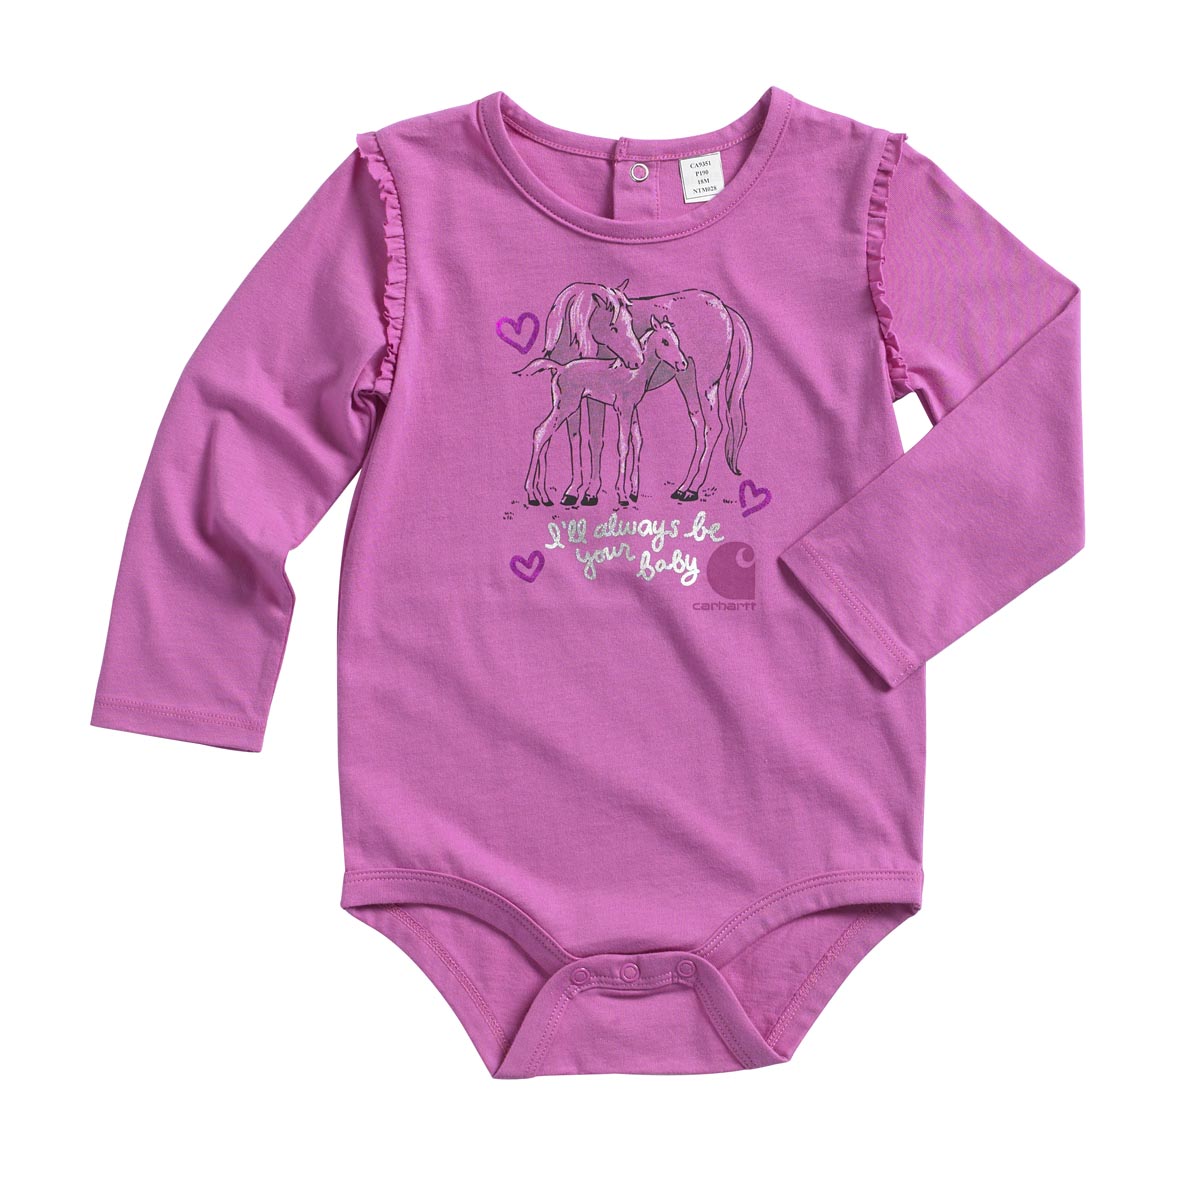 Carhartt Infant Girls' Always Your Baby Bodyshirt